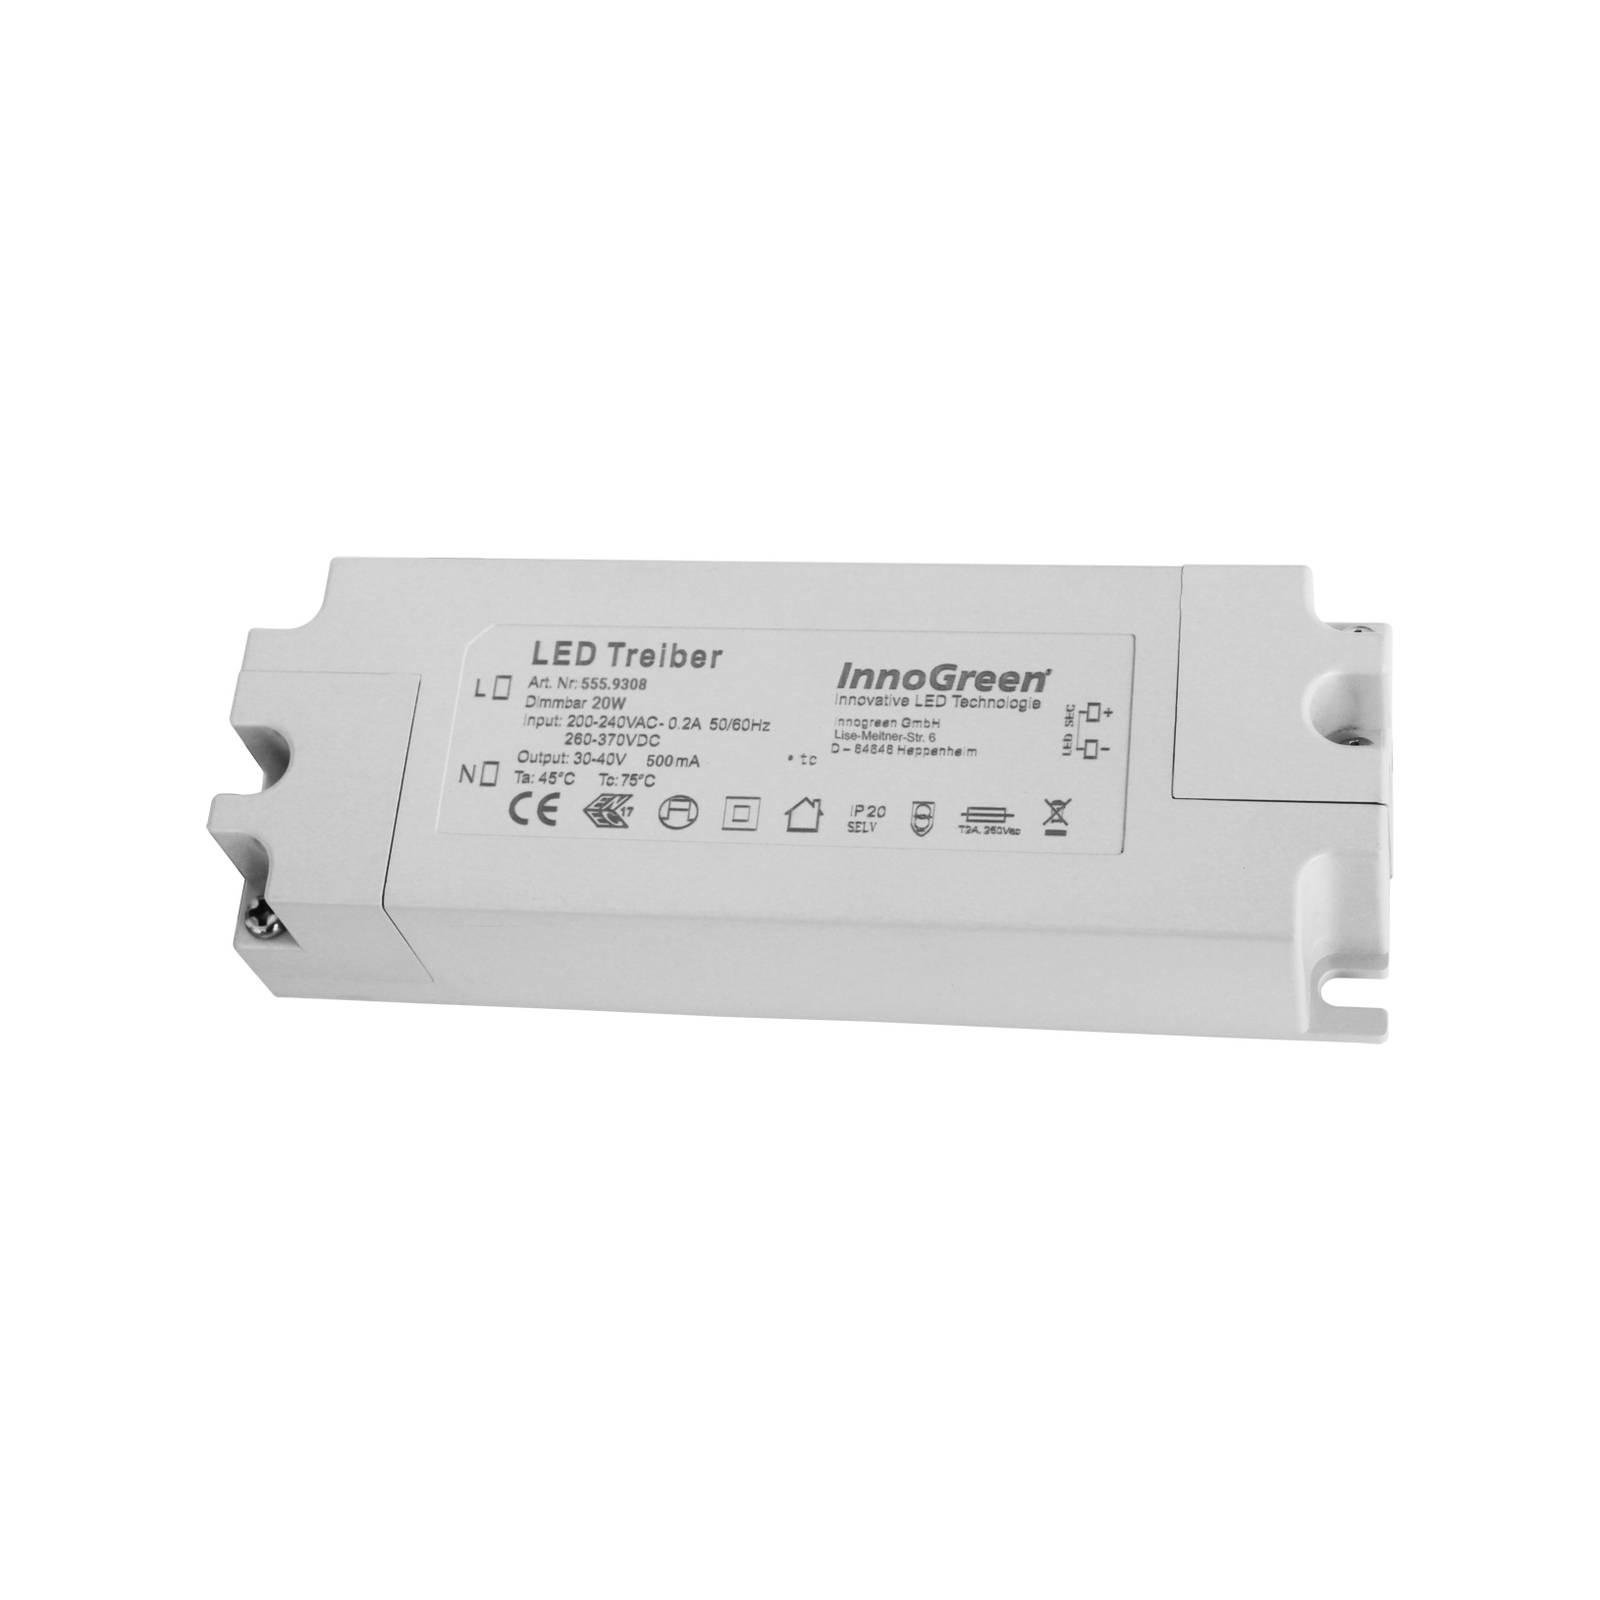 InnoGreen LED-drivare 220-240 V (AC/DC) dimbar 20W